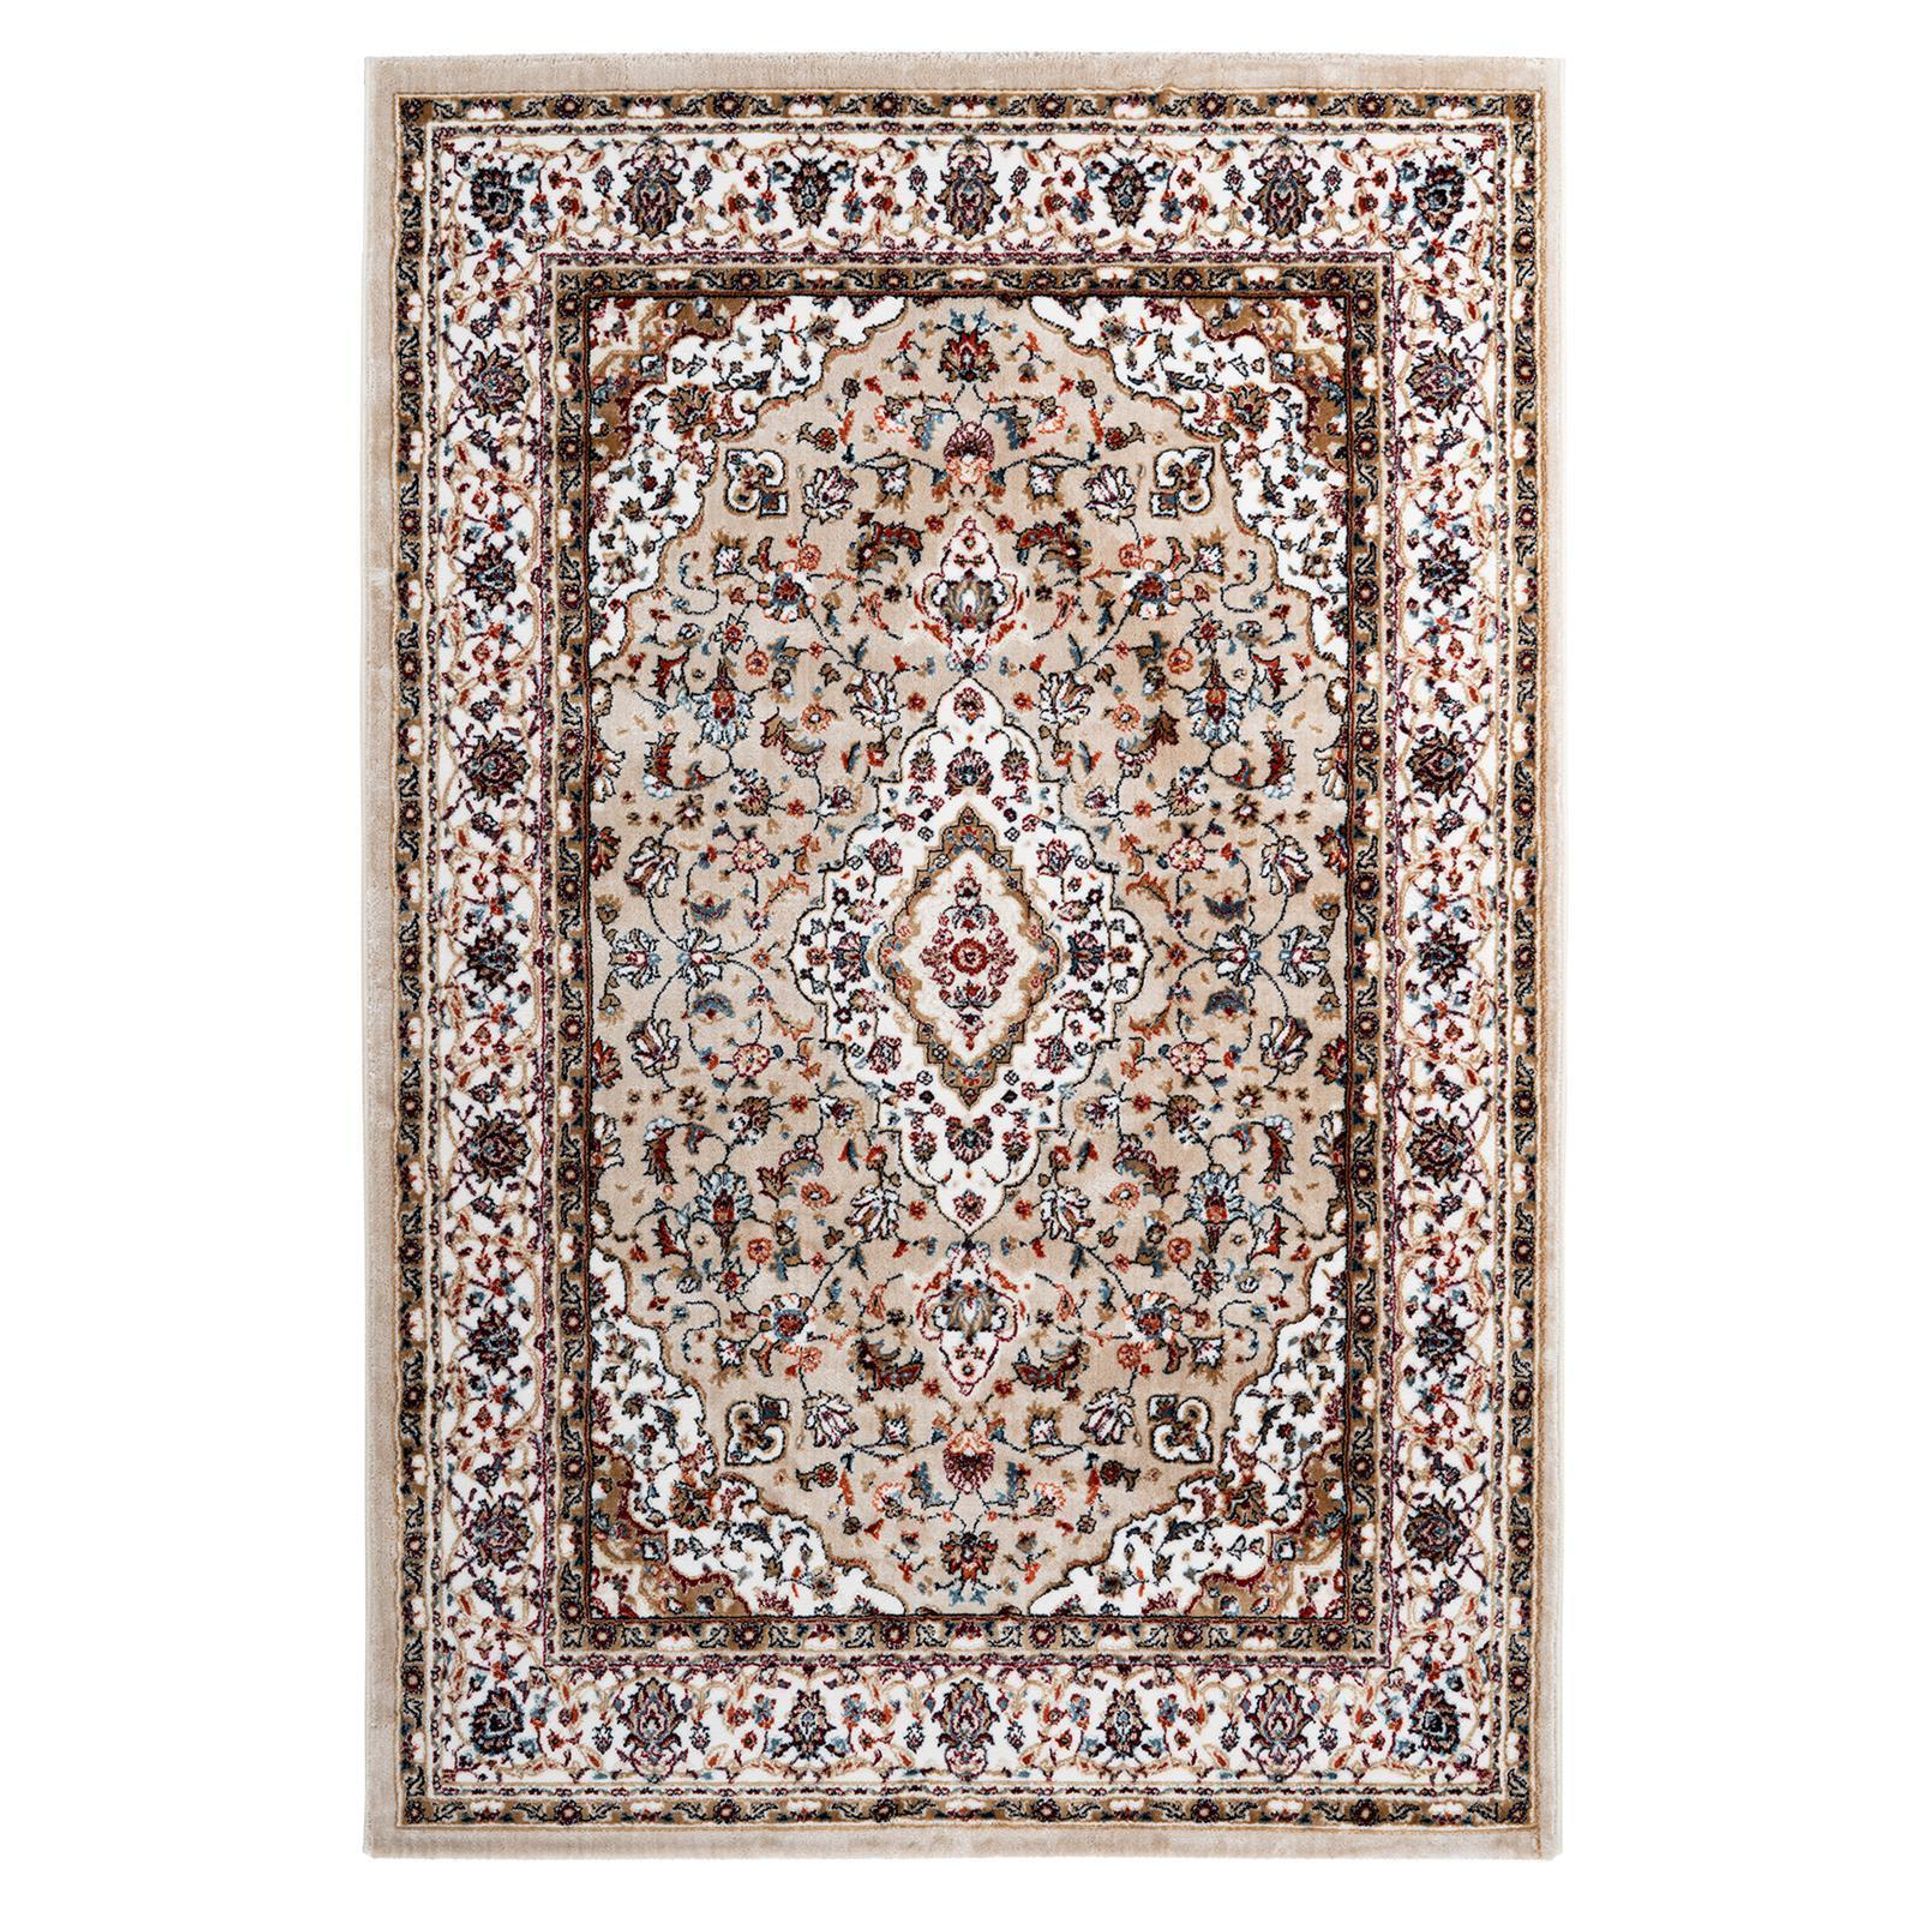 Teppich My Isfahan 740 beige 120 cm x 170 cm